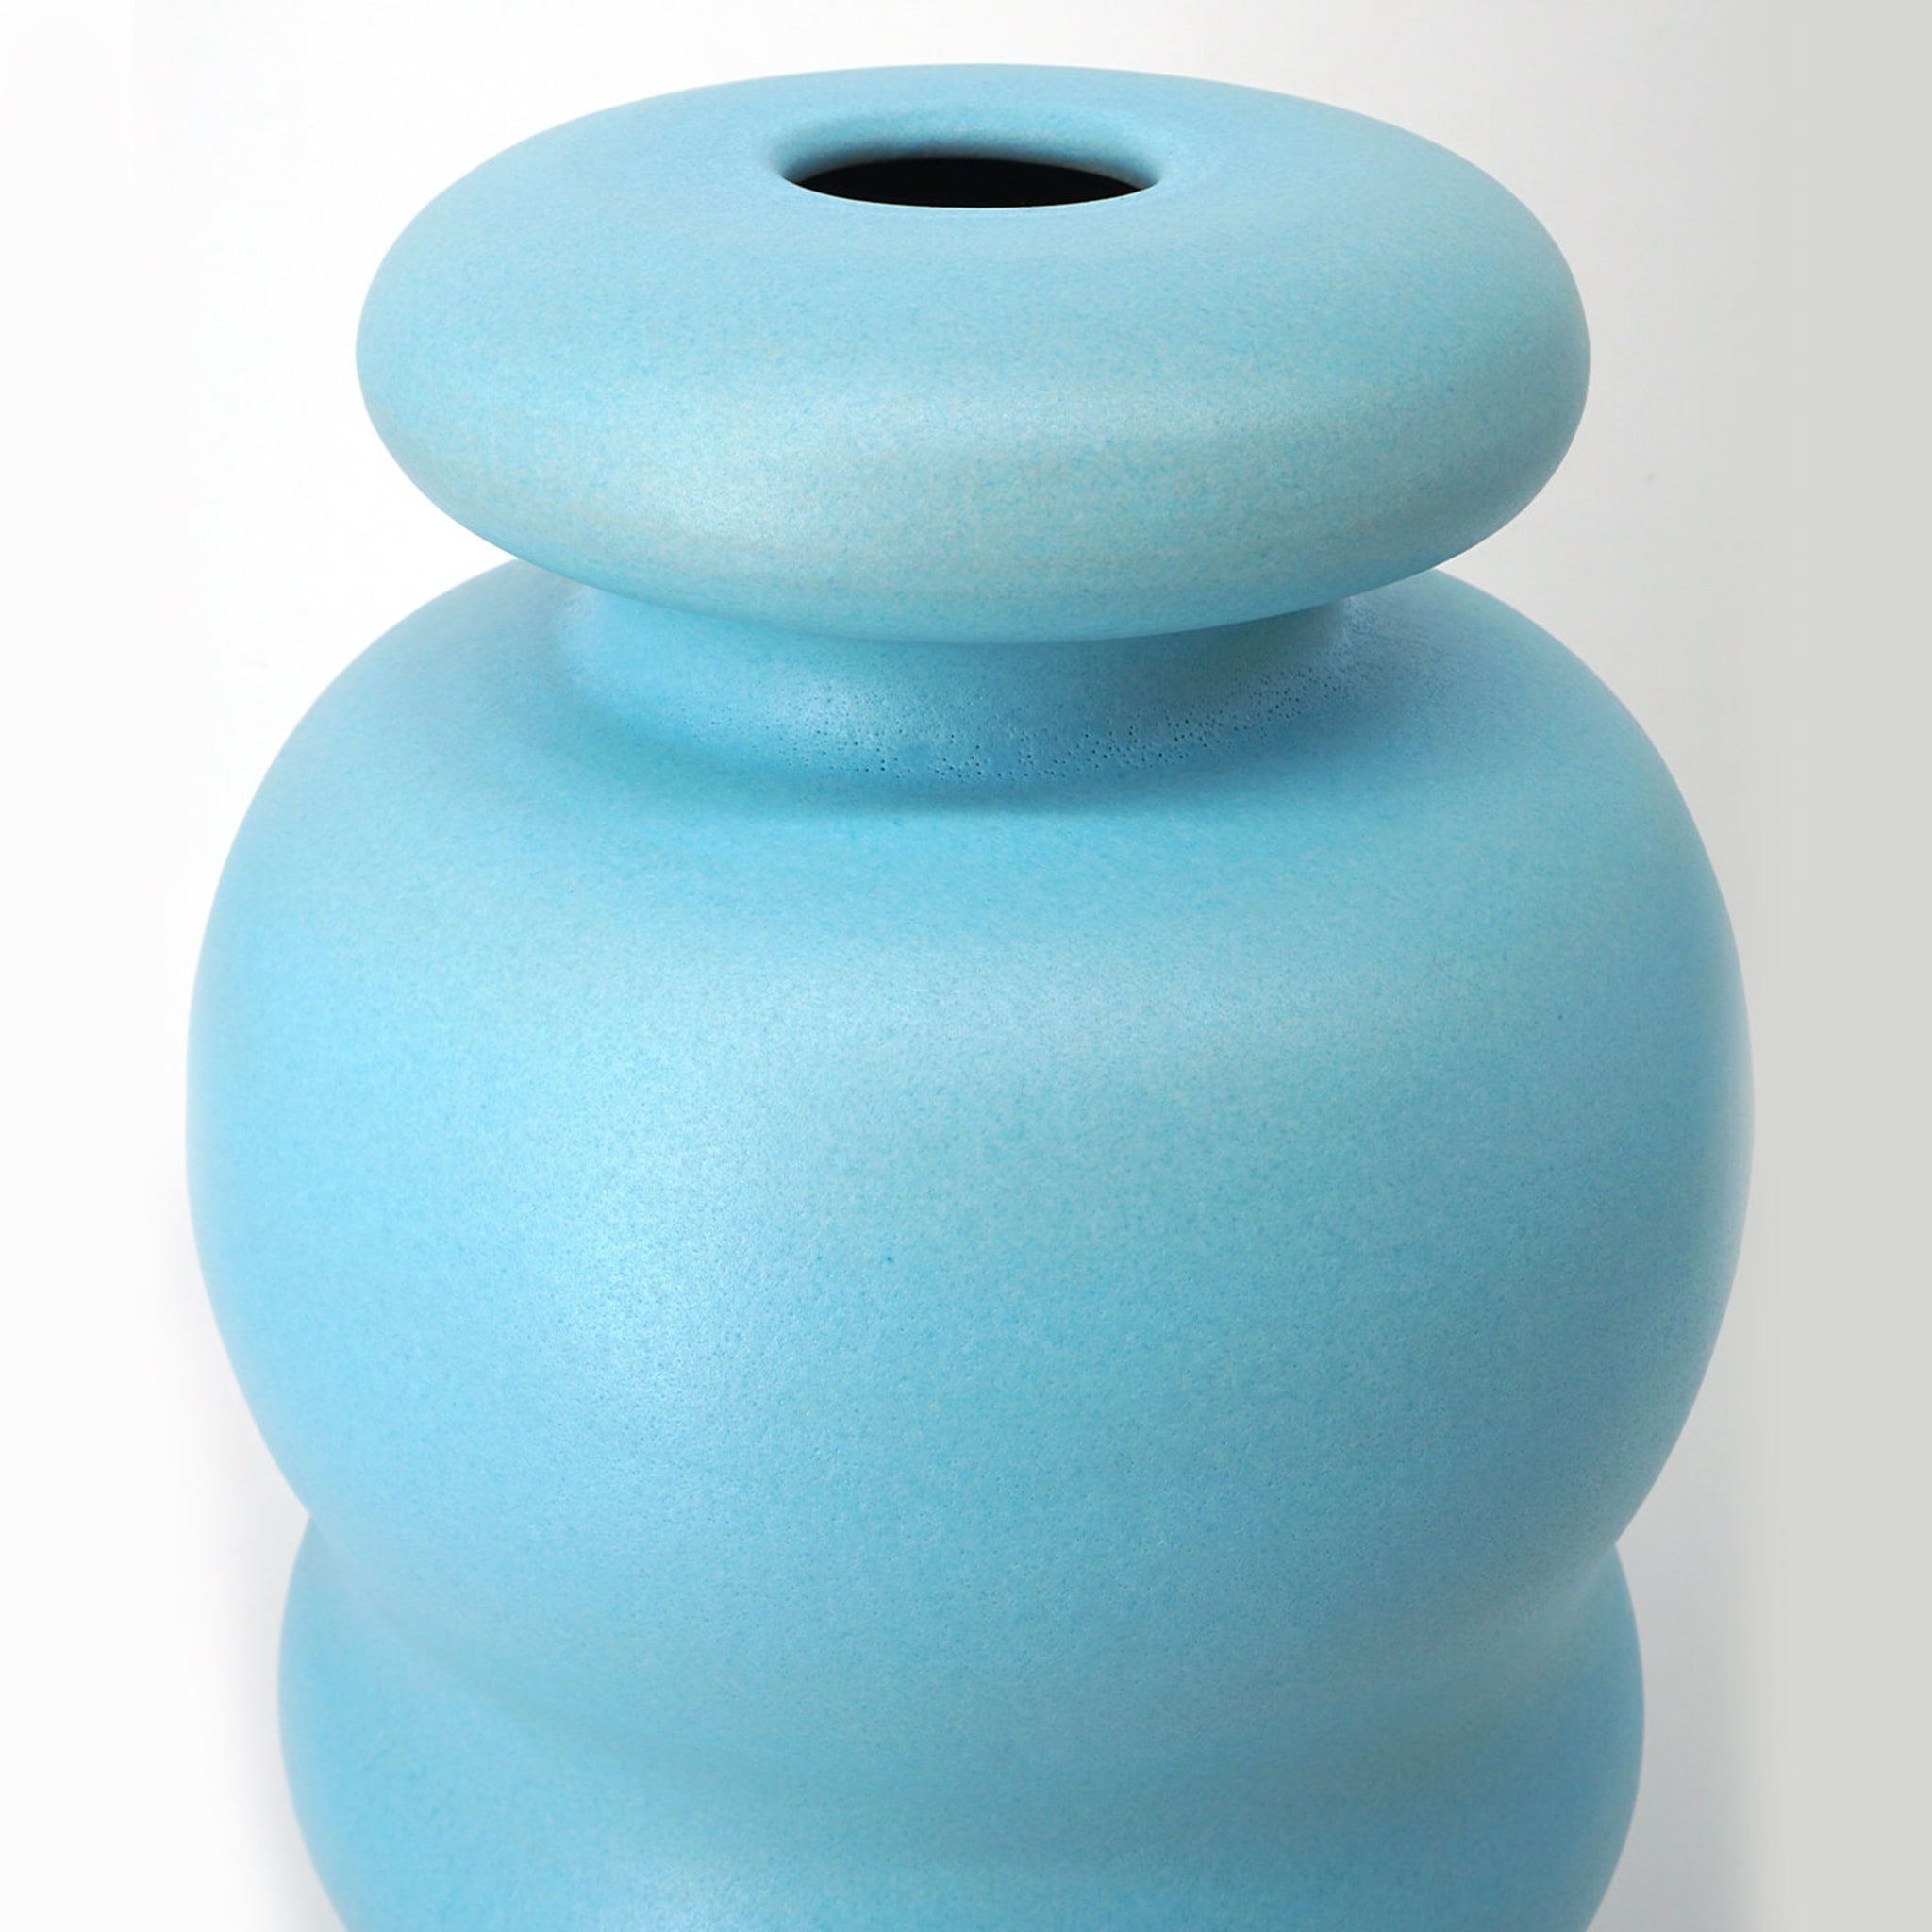 Crisalide Light Blue Vase #9 - Alternative view 1